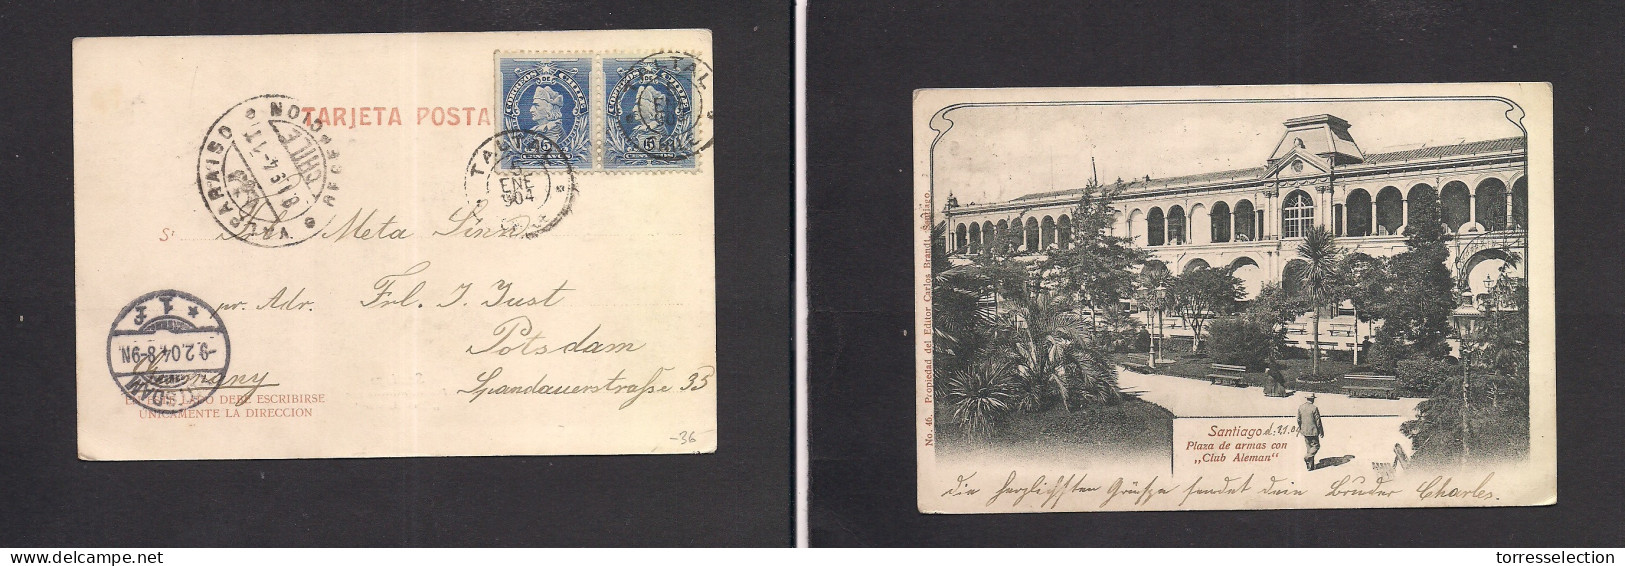 Chile - XX. 1904 (5 Ene) Taltal - Postdam, Germany (9 Feb) 10c Rate Multifkd Early Ppc. Club Aleman. Fine. XSALE. - Chile